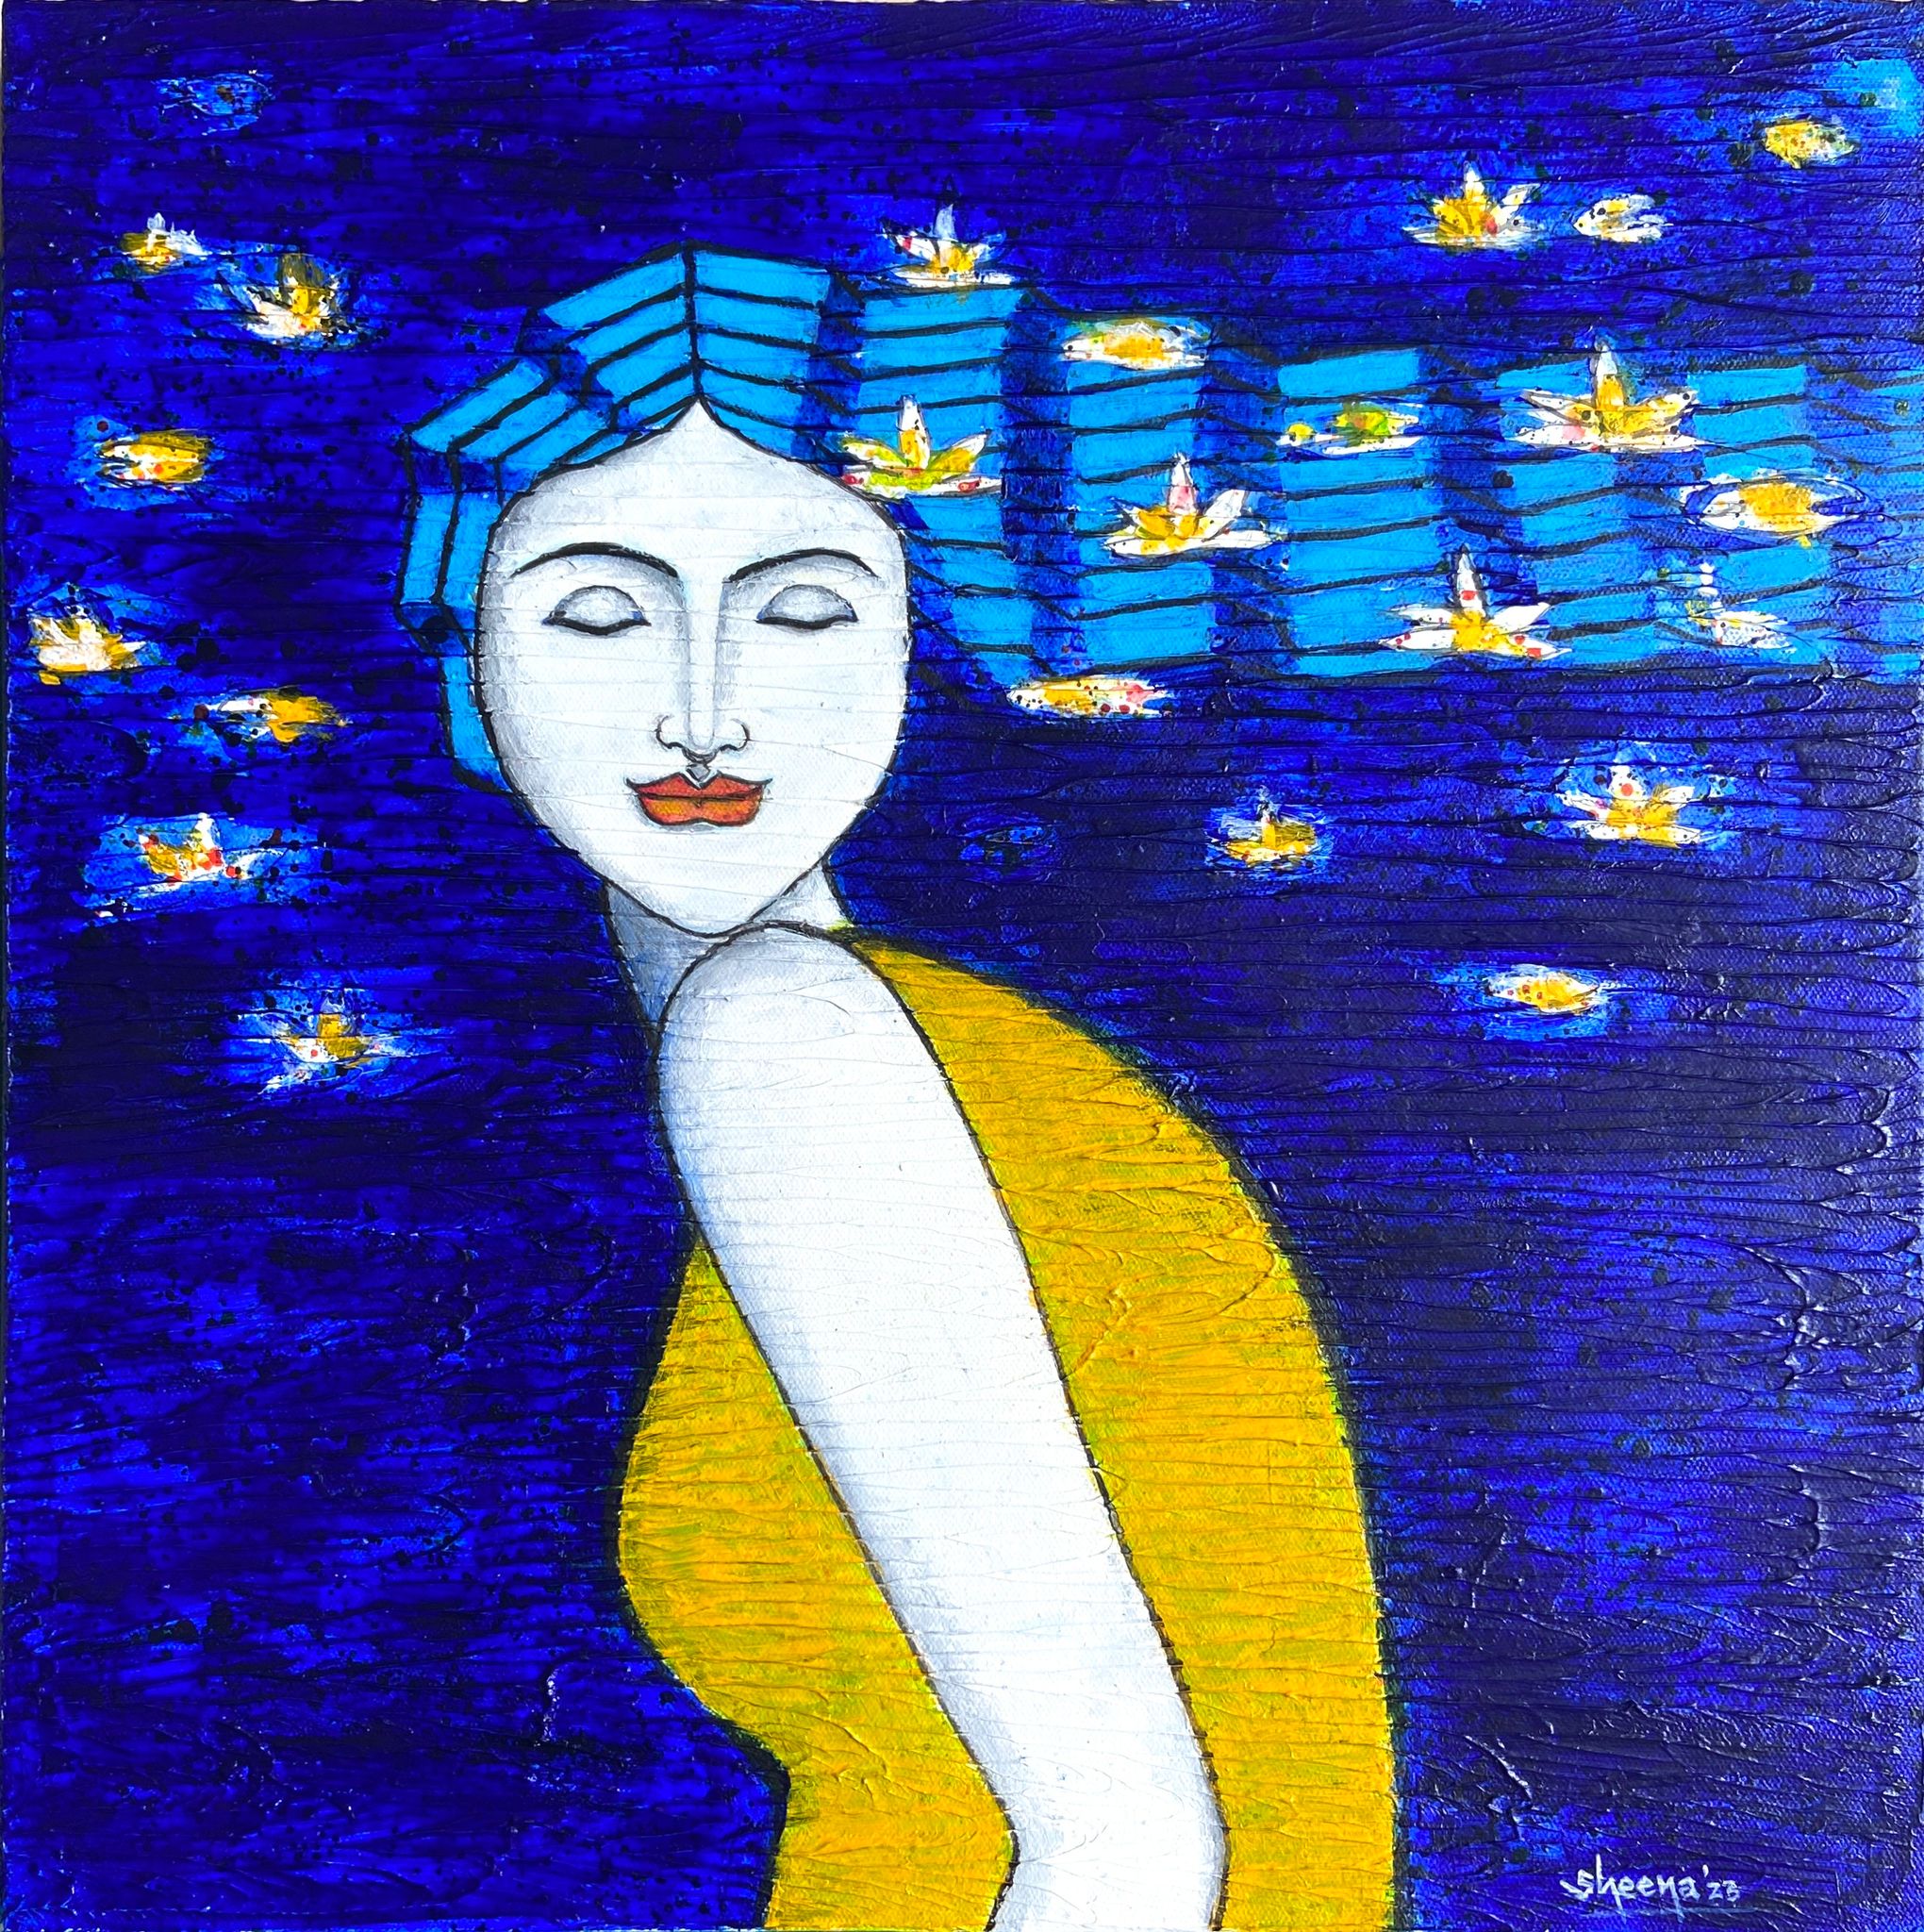 Painting, Studio Fine Art Gallery @ Affordable Art Fair, Sheena Bharatan, Blue radiance